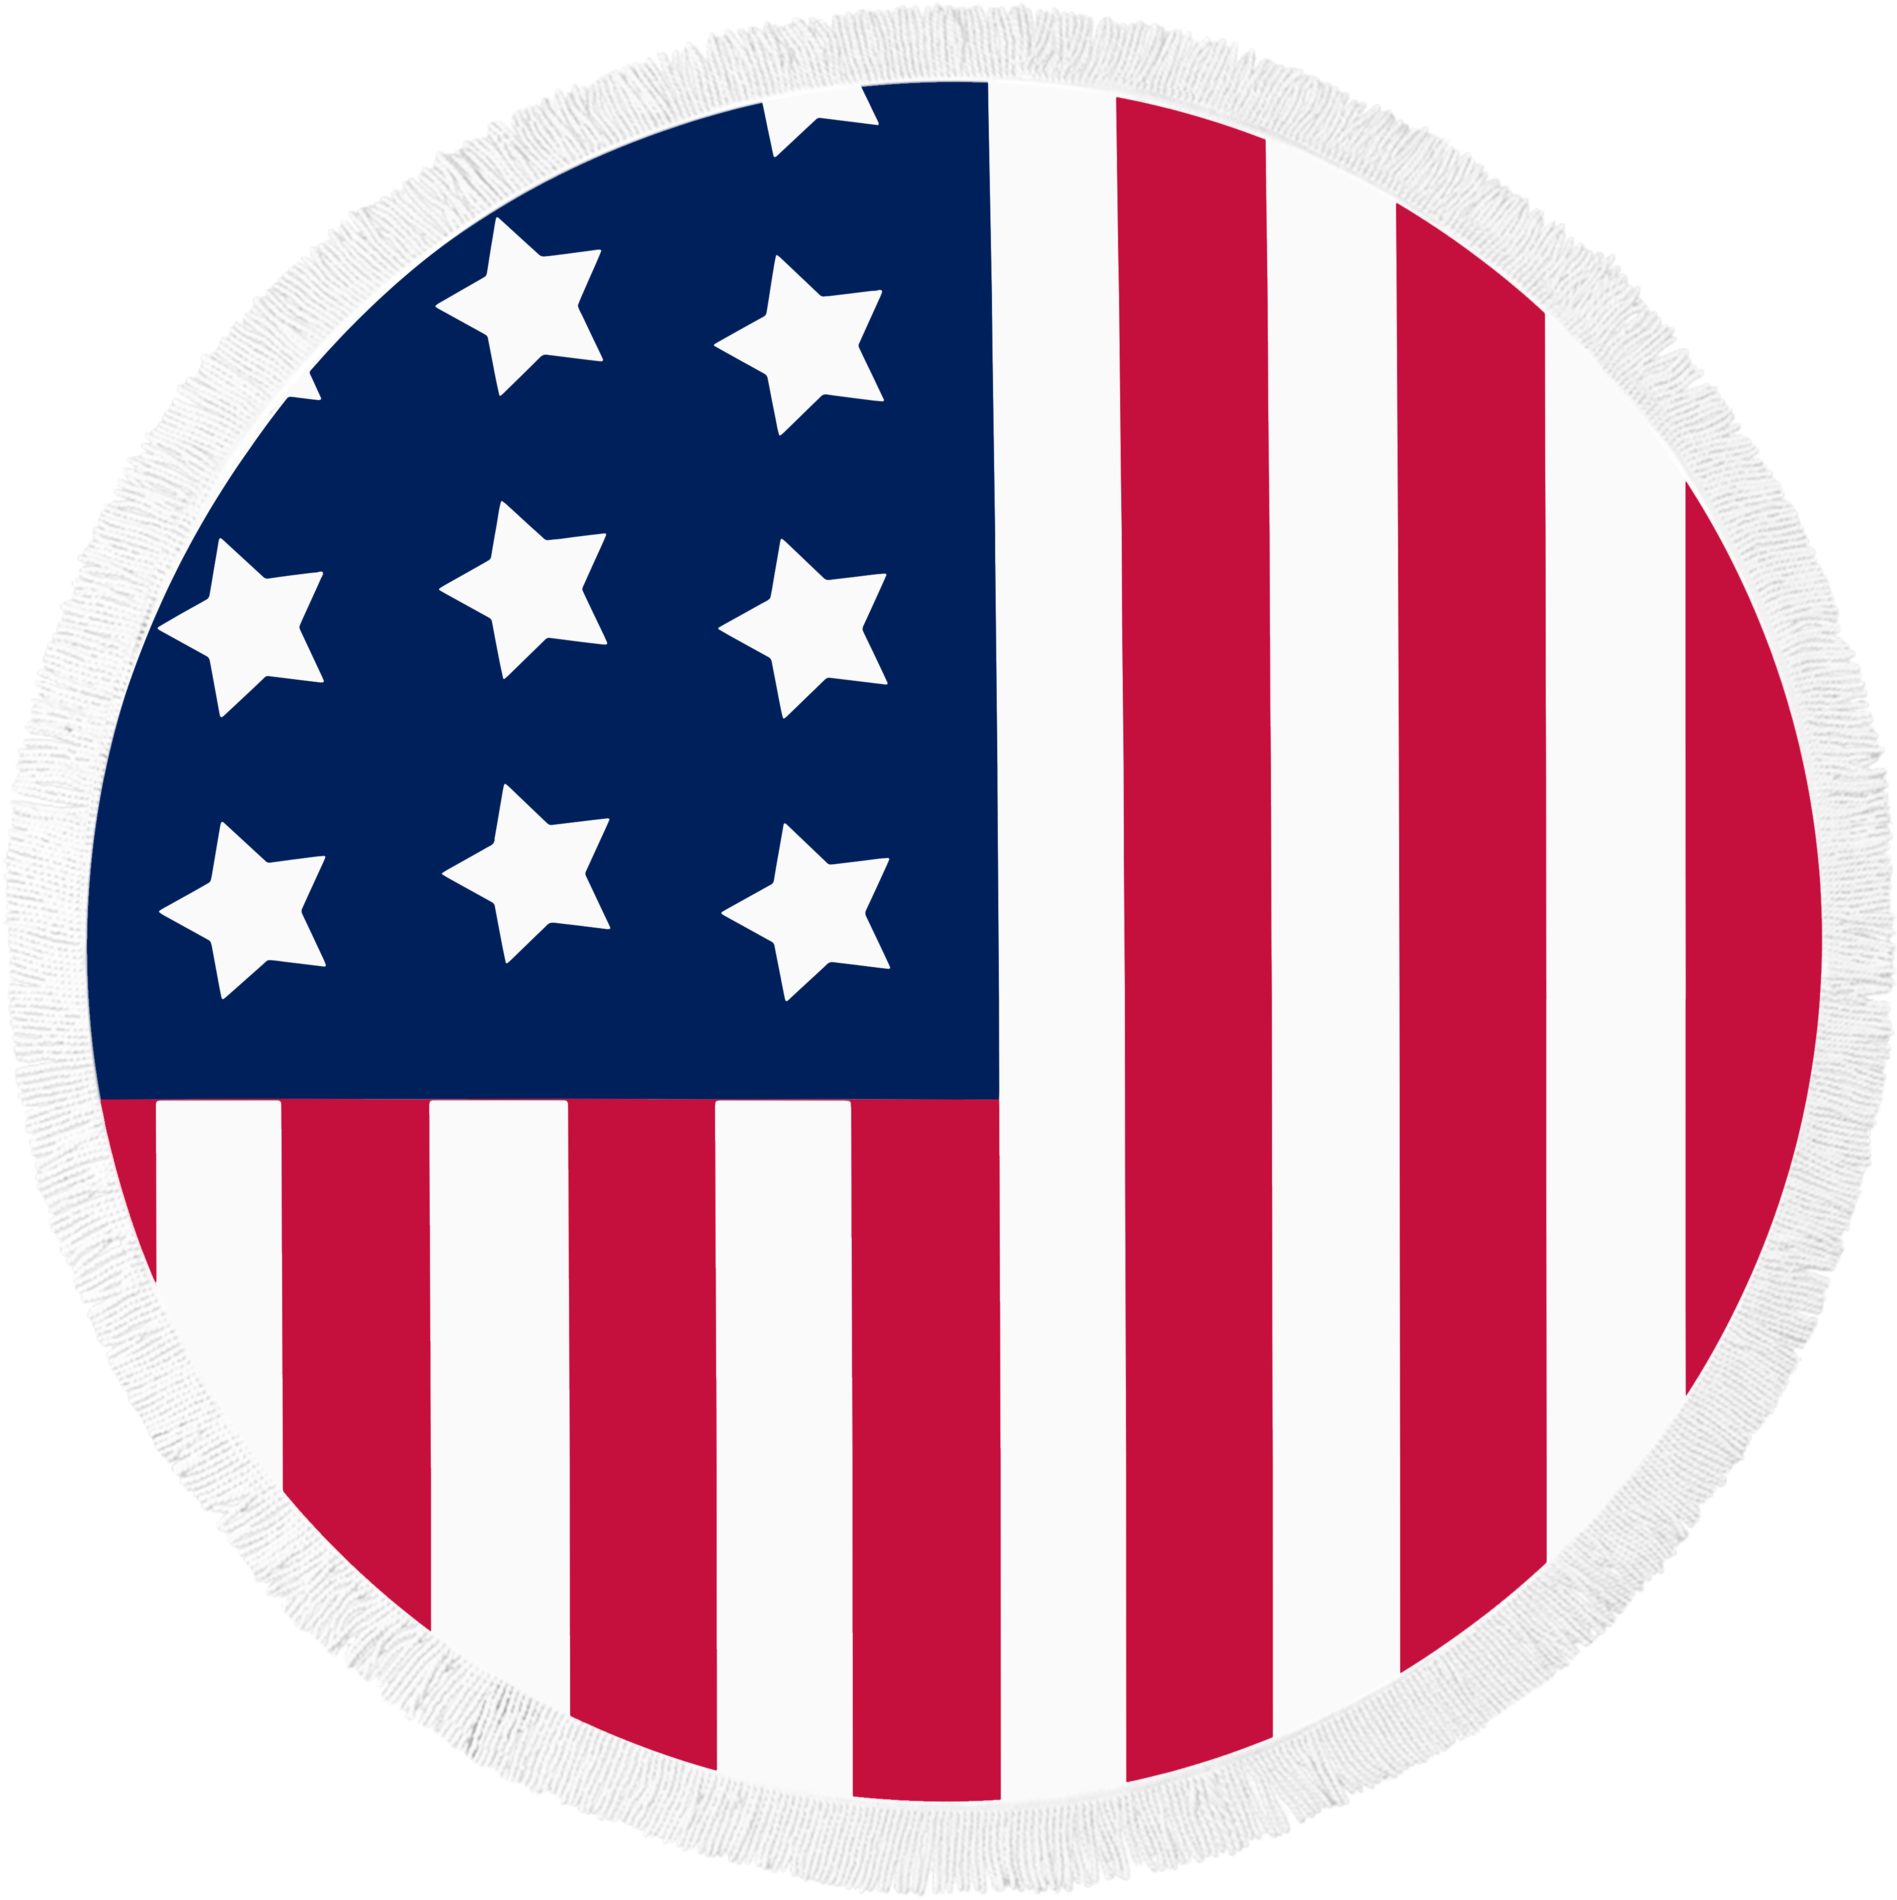 image of US flag